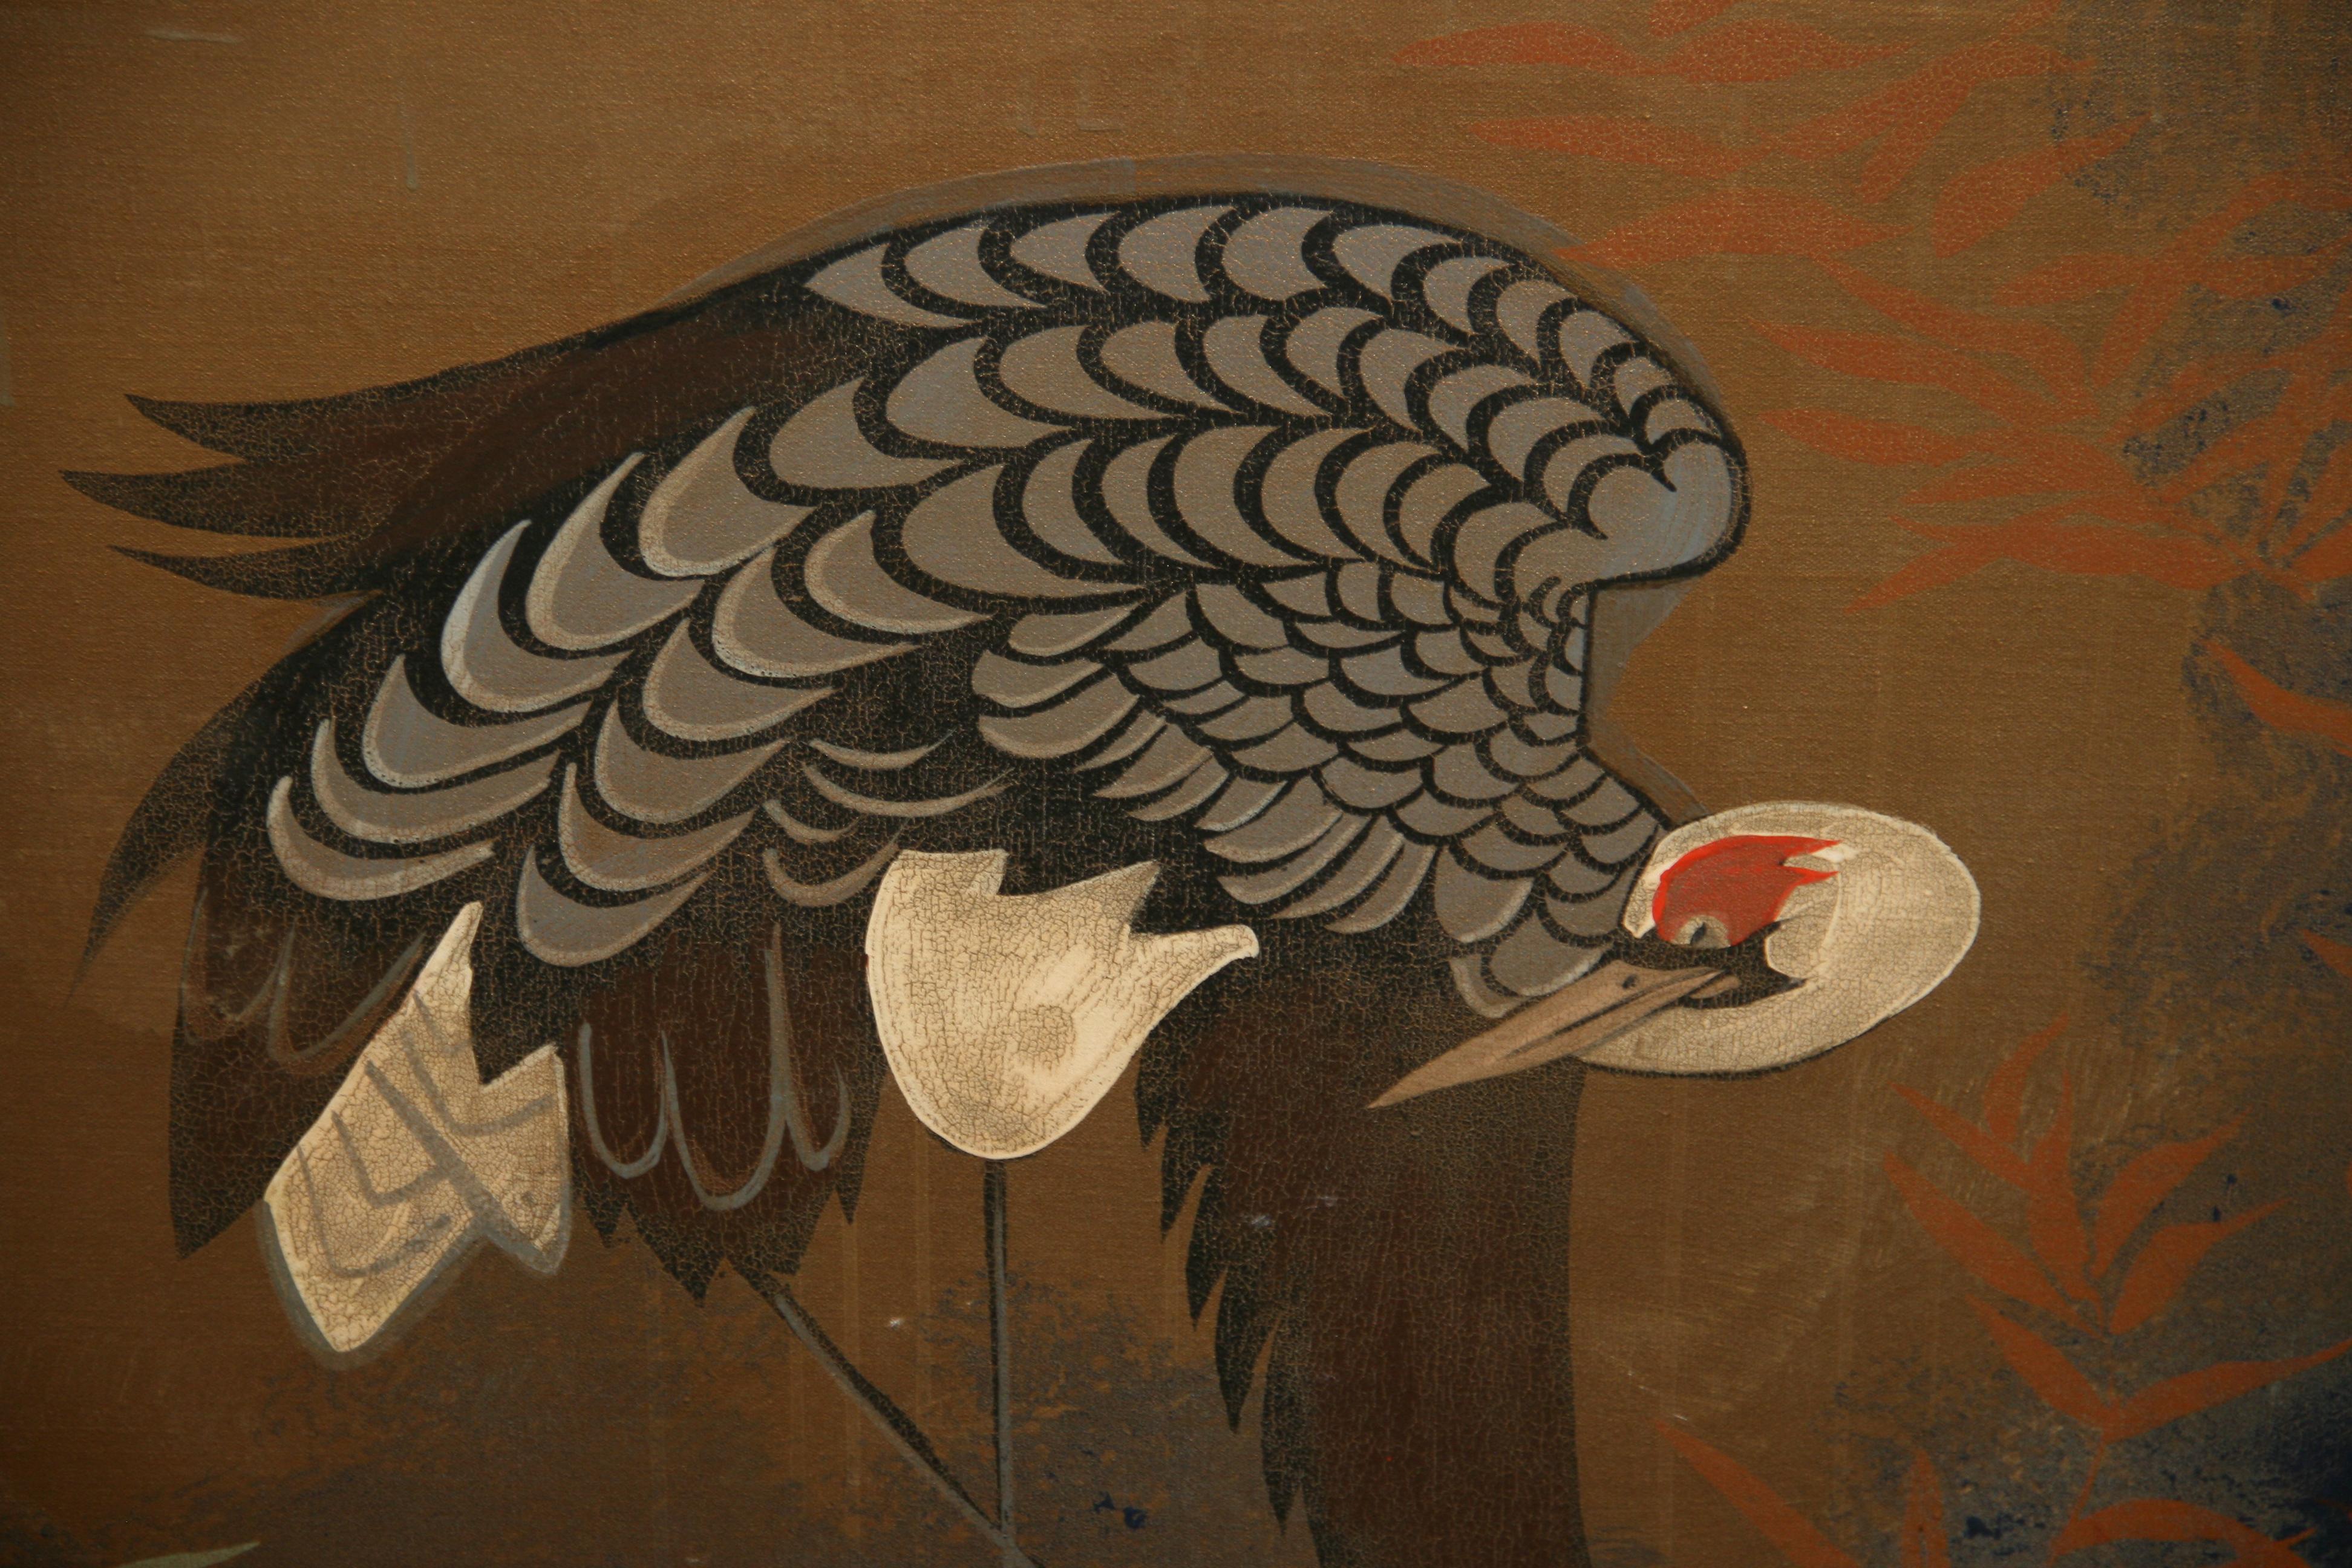 Asian influence oversized egret landscape painting
Unframed
 